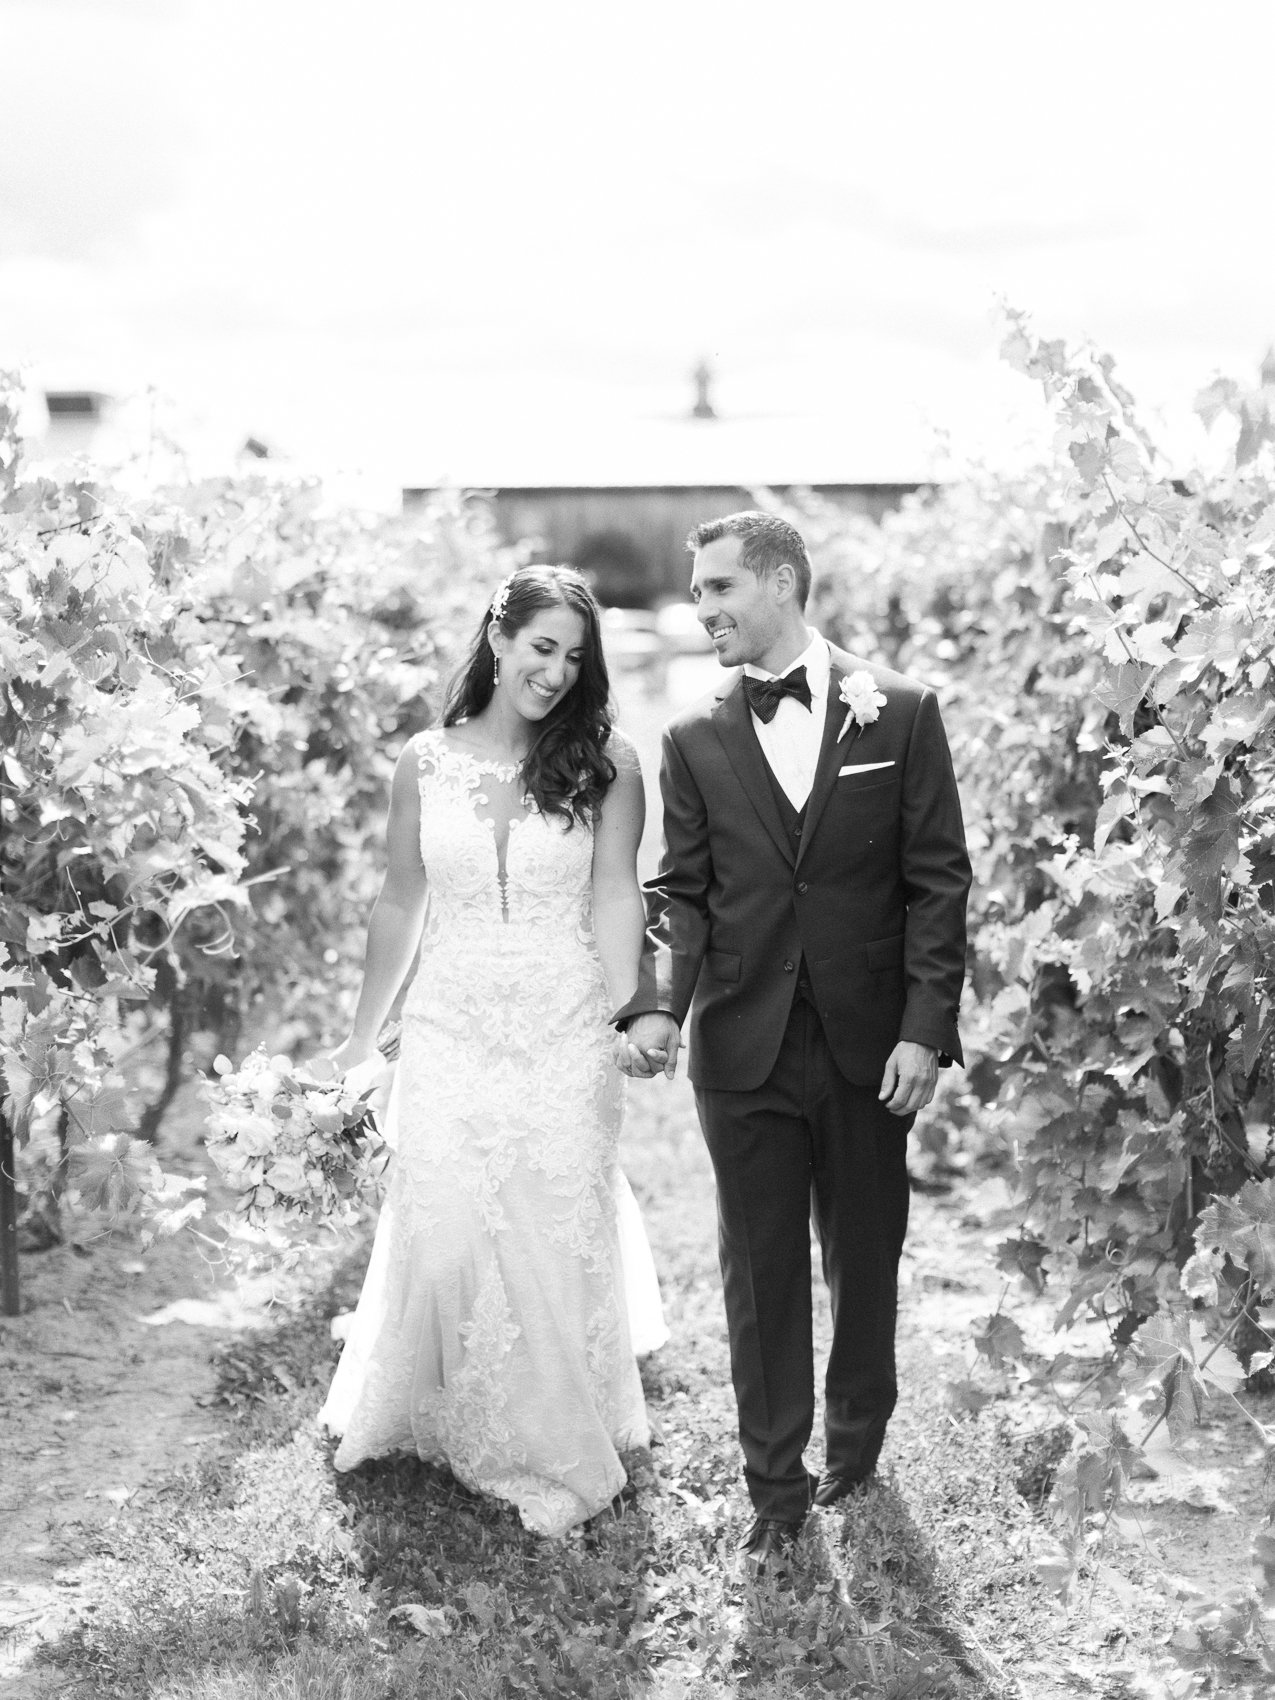 Caila & Mick Wedding Web 2021 - 165.jpg